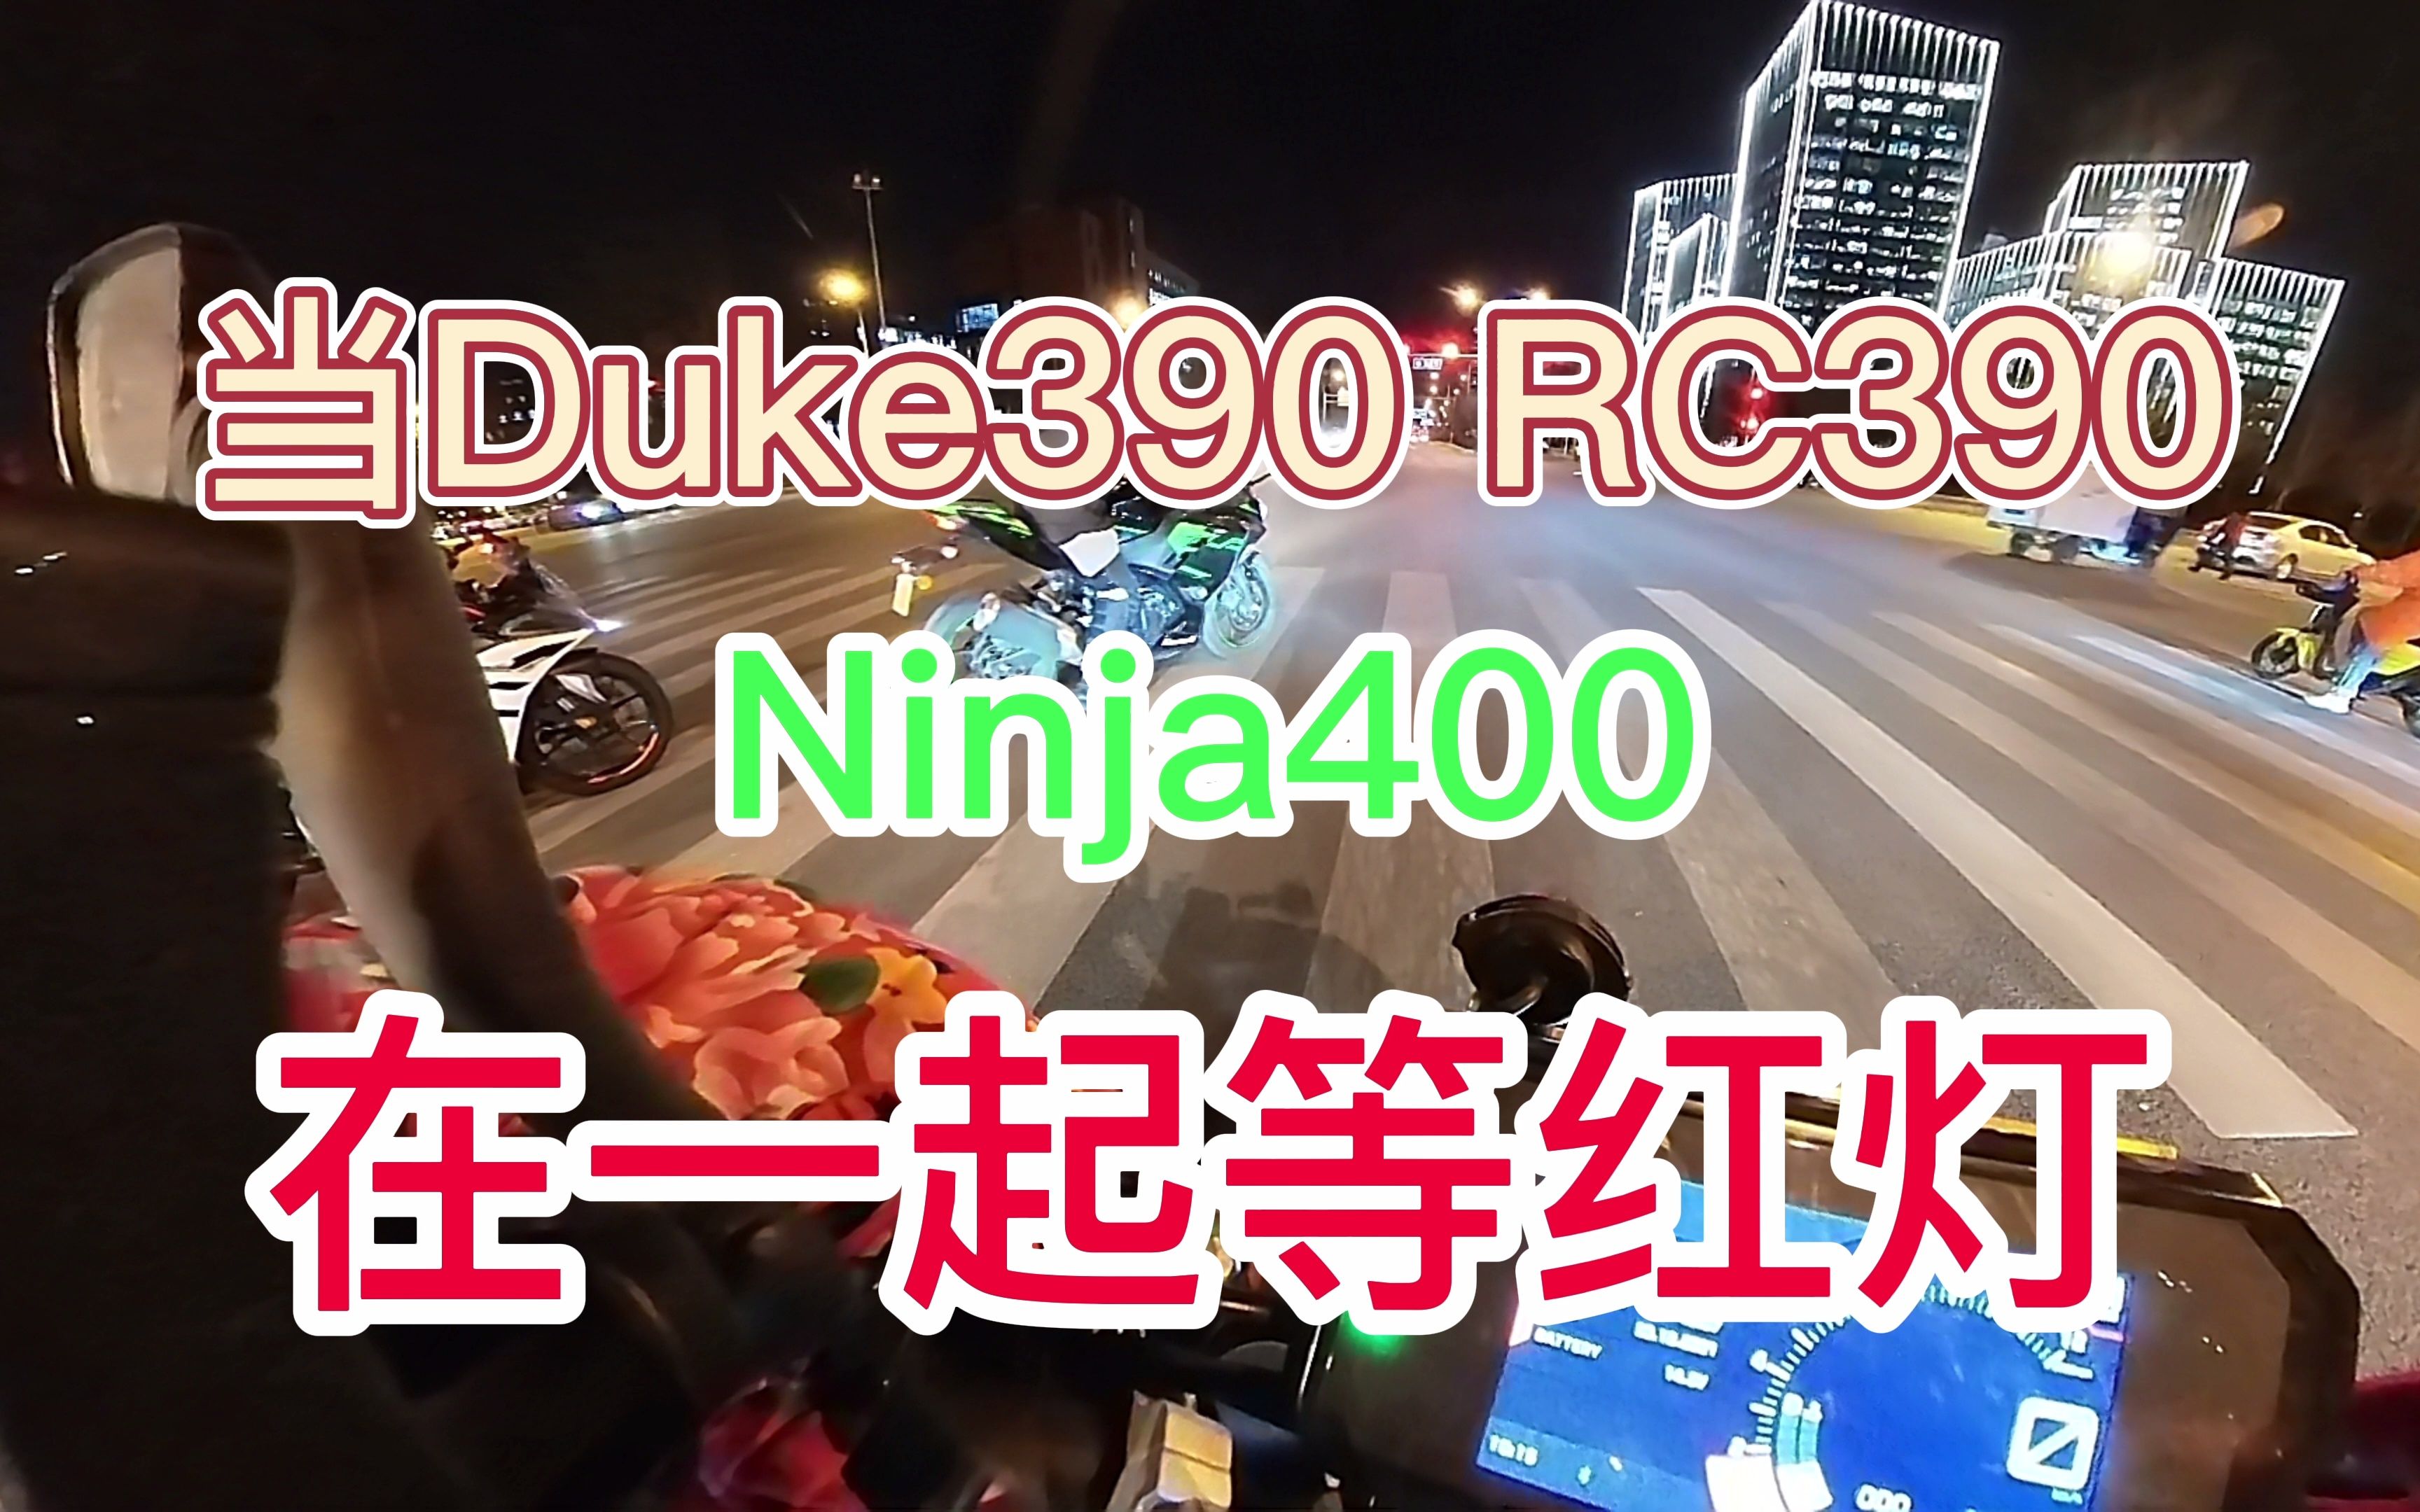 当Duke390,Rc390,Ninja400在一起等红灯